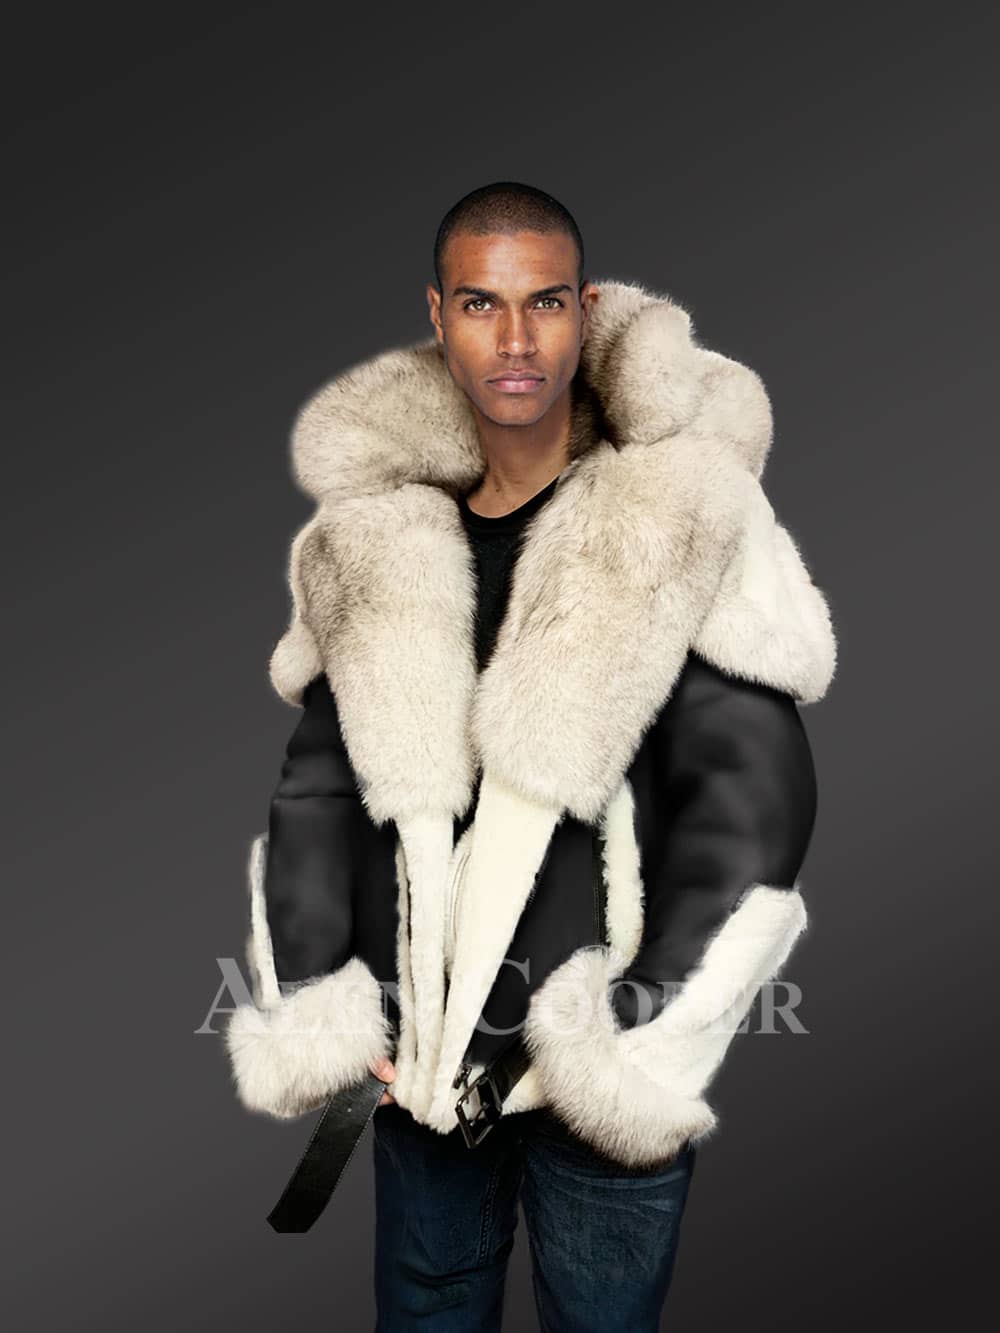 Mens black coat with fur collar